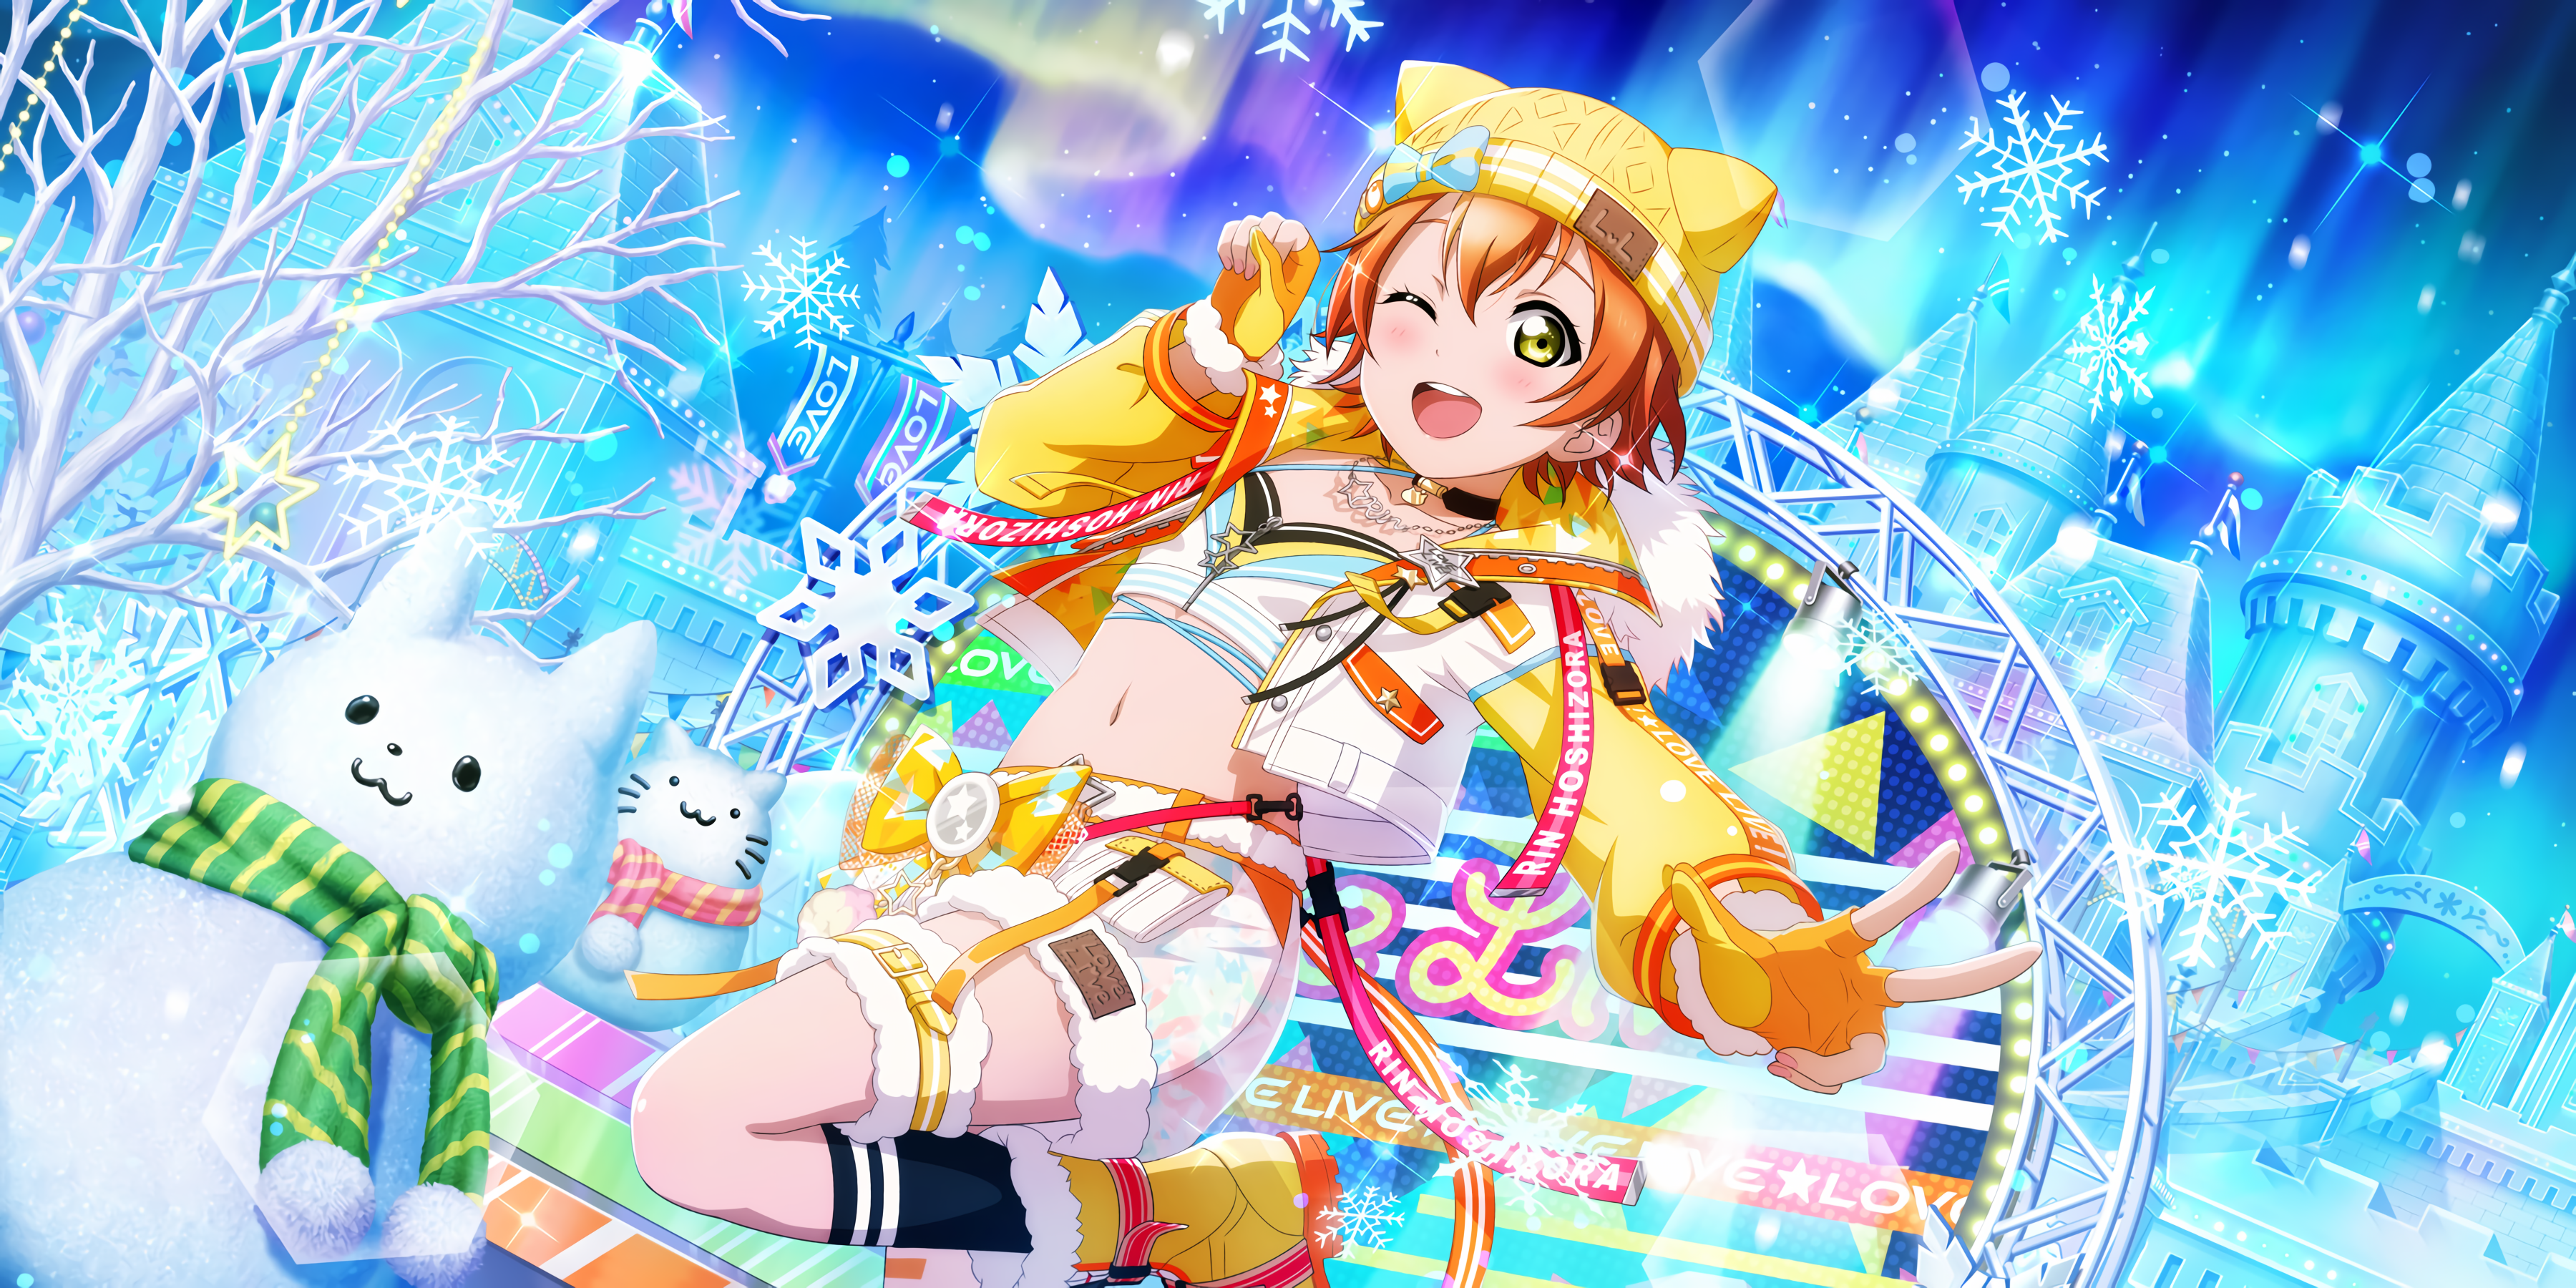 Hoshizora Rin Love Live Anime Anime Girls One Eye Closed Hat Gloves Snow Snowflakes Scarf Snowman Fi 3600x1800